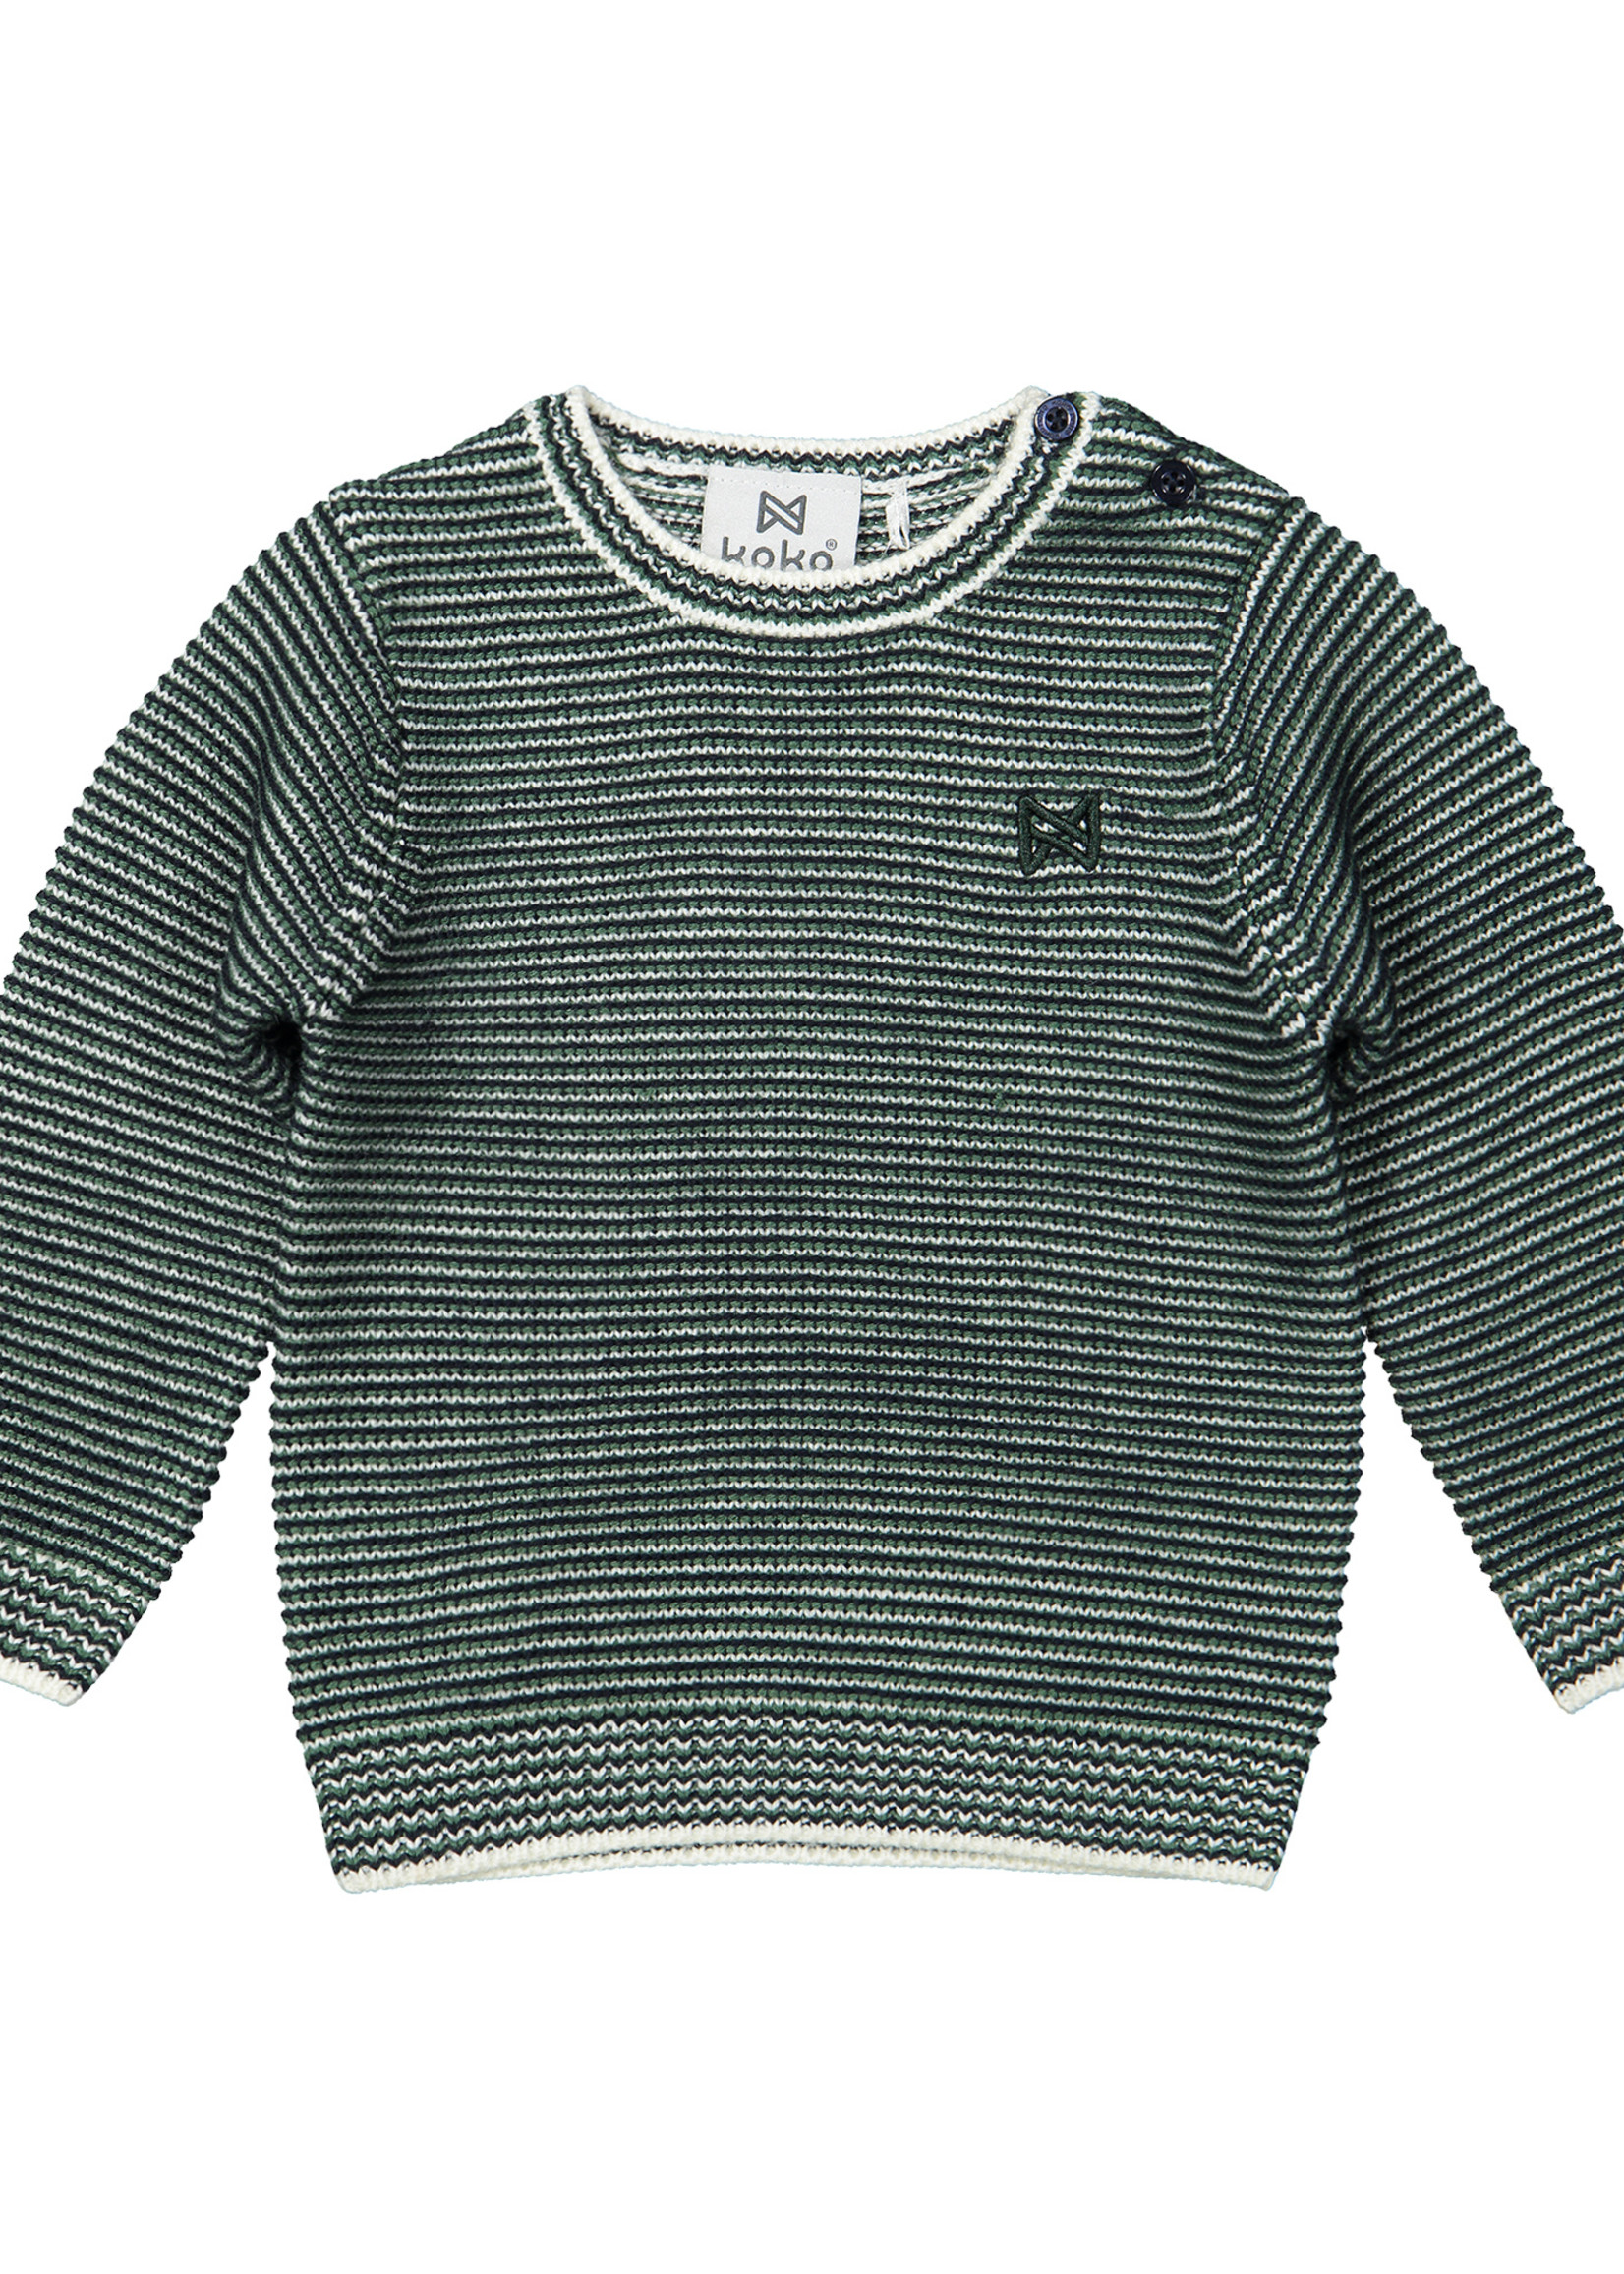 Koko Noko Boys Sweater ls, Green, F40801-37